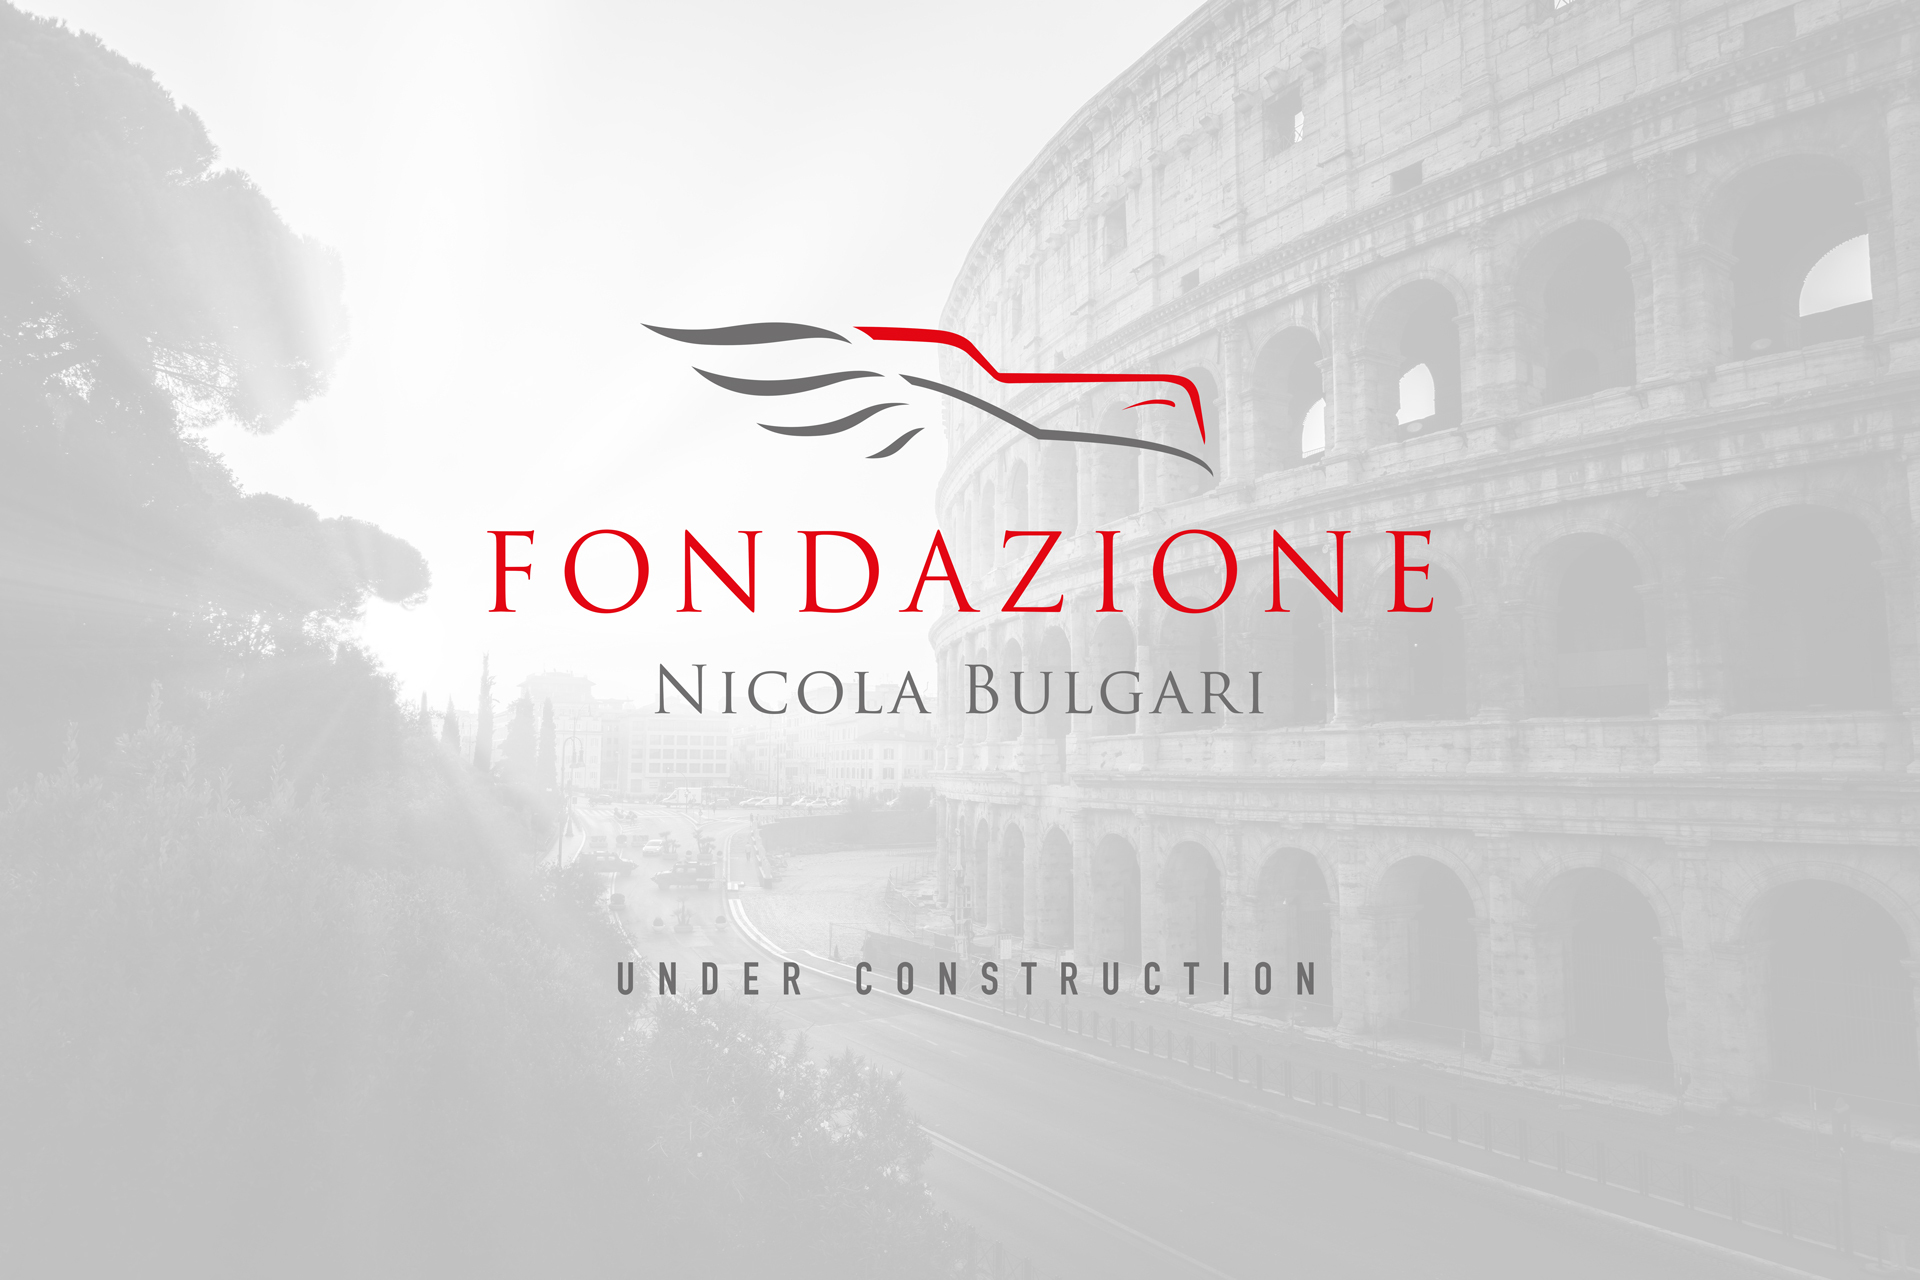 Fondazione Nicola Bulgari - Under Construction